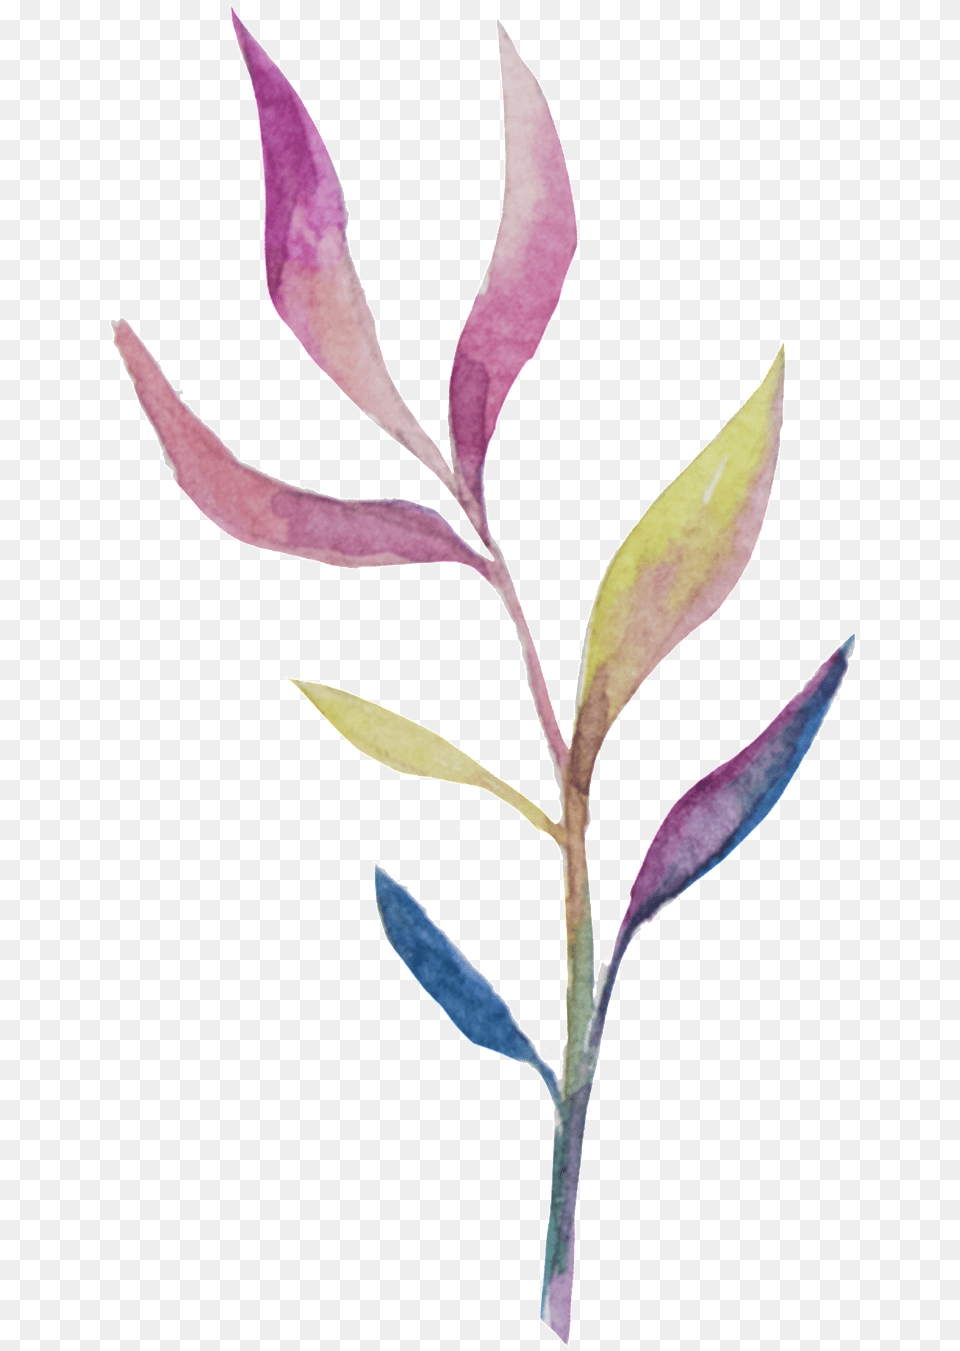 Transparente De Ramas Y Hojas Ornamentales Para Purple, Leaf, Plant, Herbs, Herbal Png Image